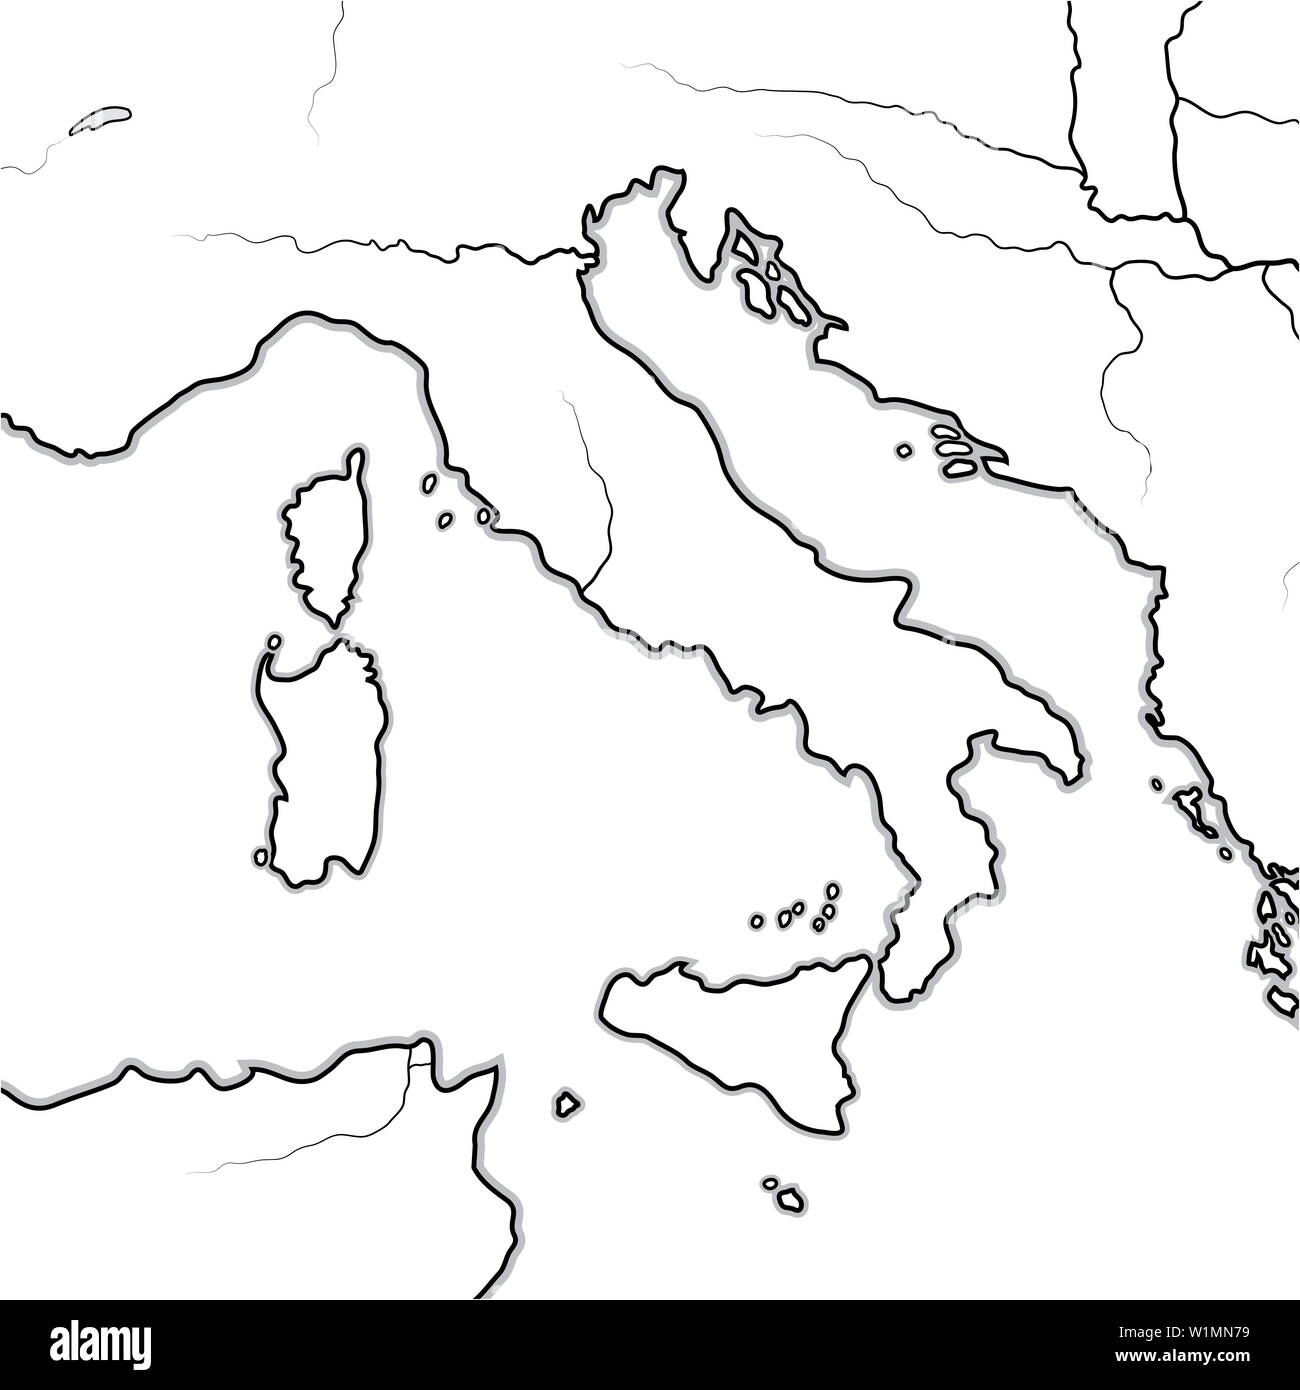 Map of The ITALIAN Lands: Italy, Tuscany, Lombardy, Sicily, Liguria, Umbria, Campania, Neapolitania, The Apennines, Italian Peninsula. Stock Photo